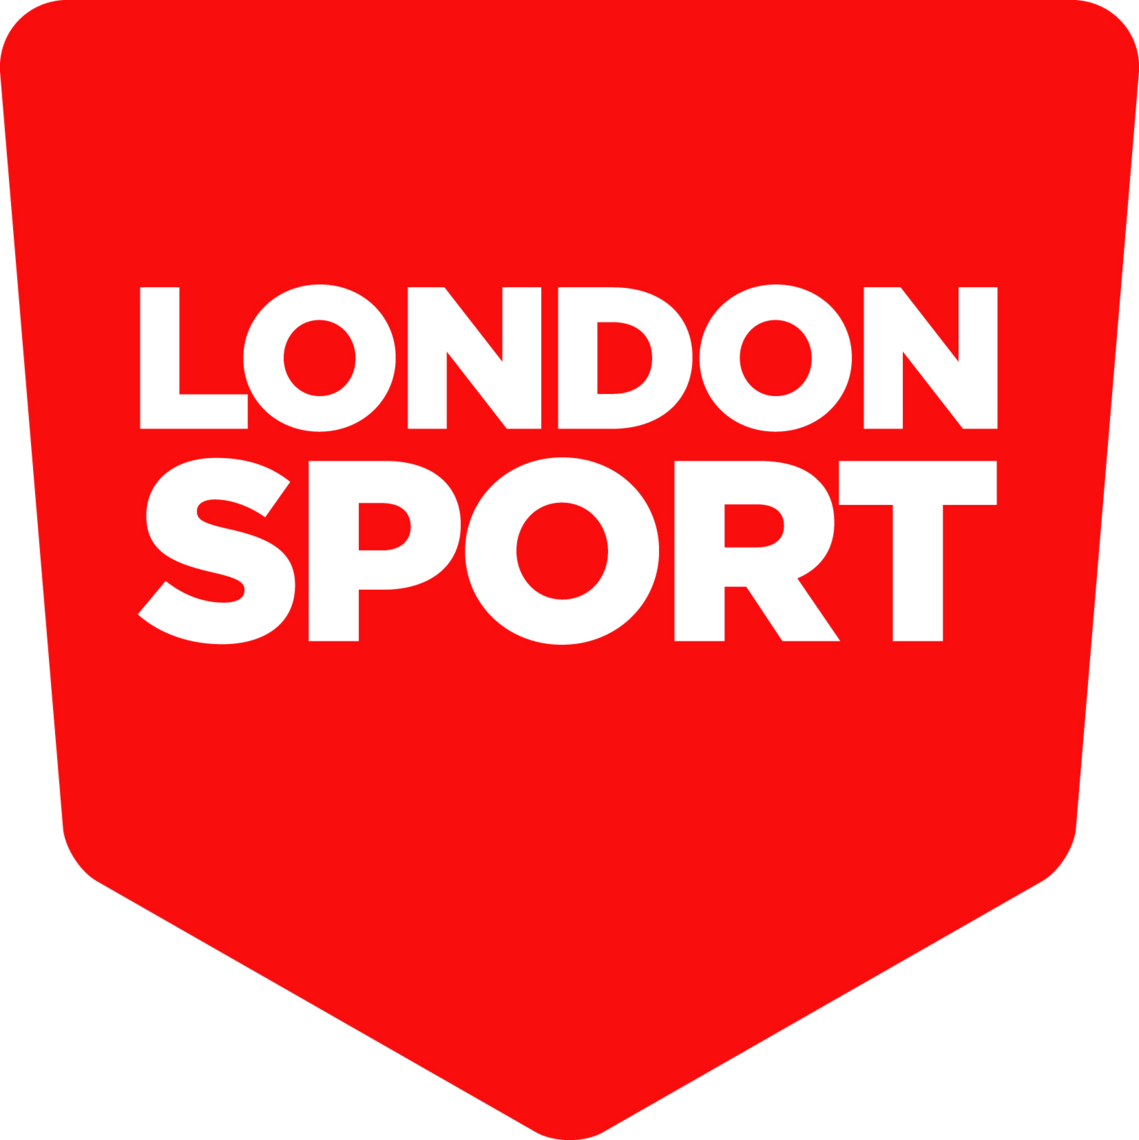 London sport logo png